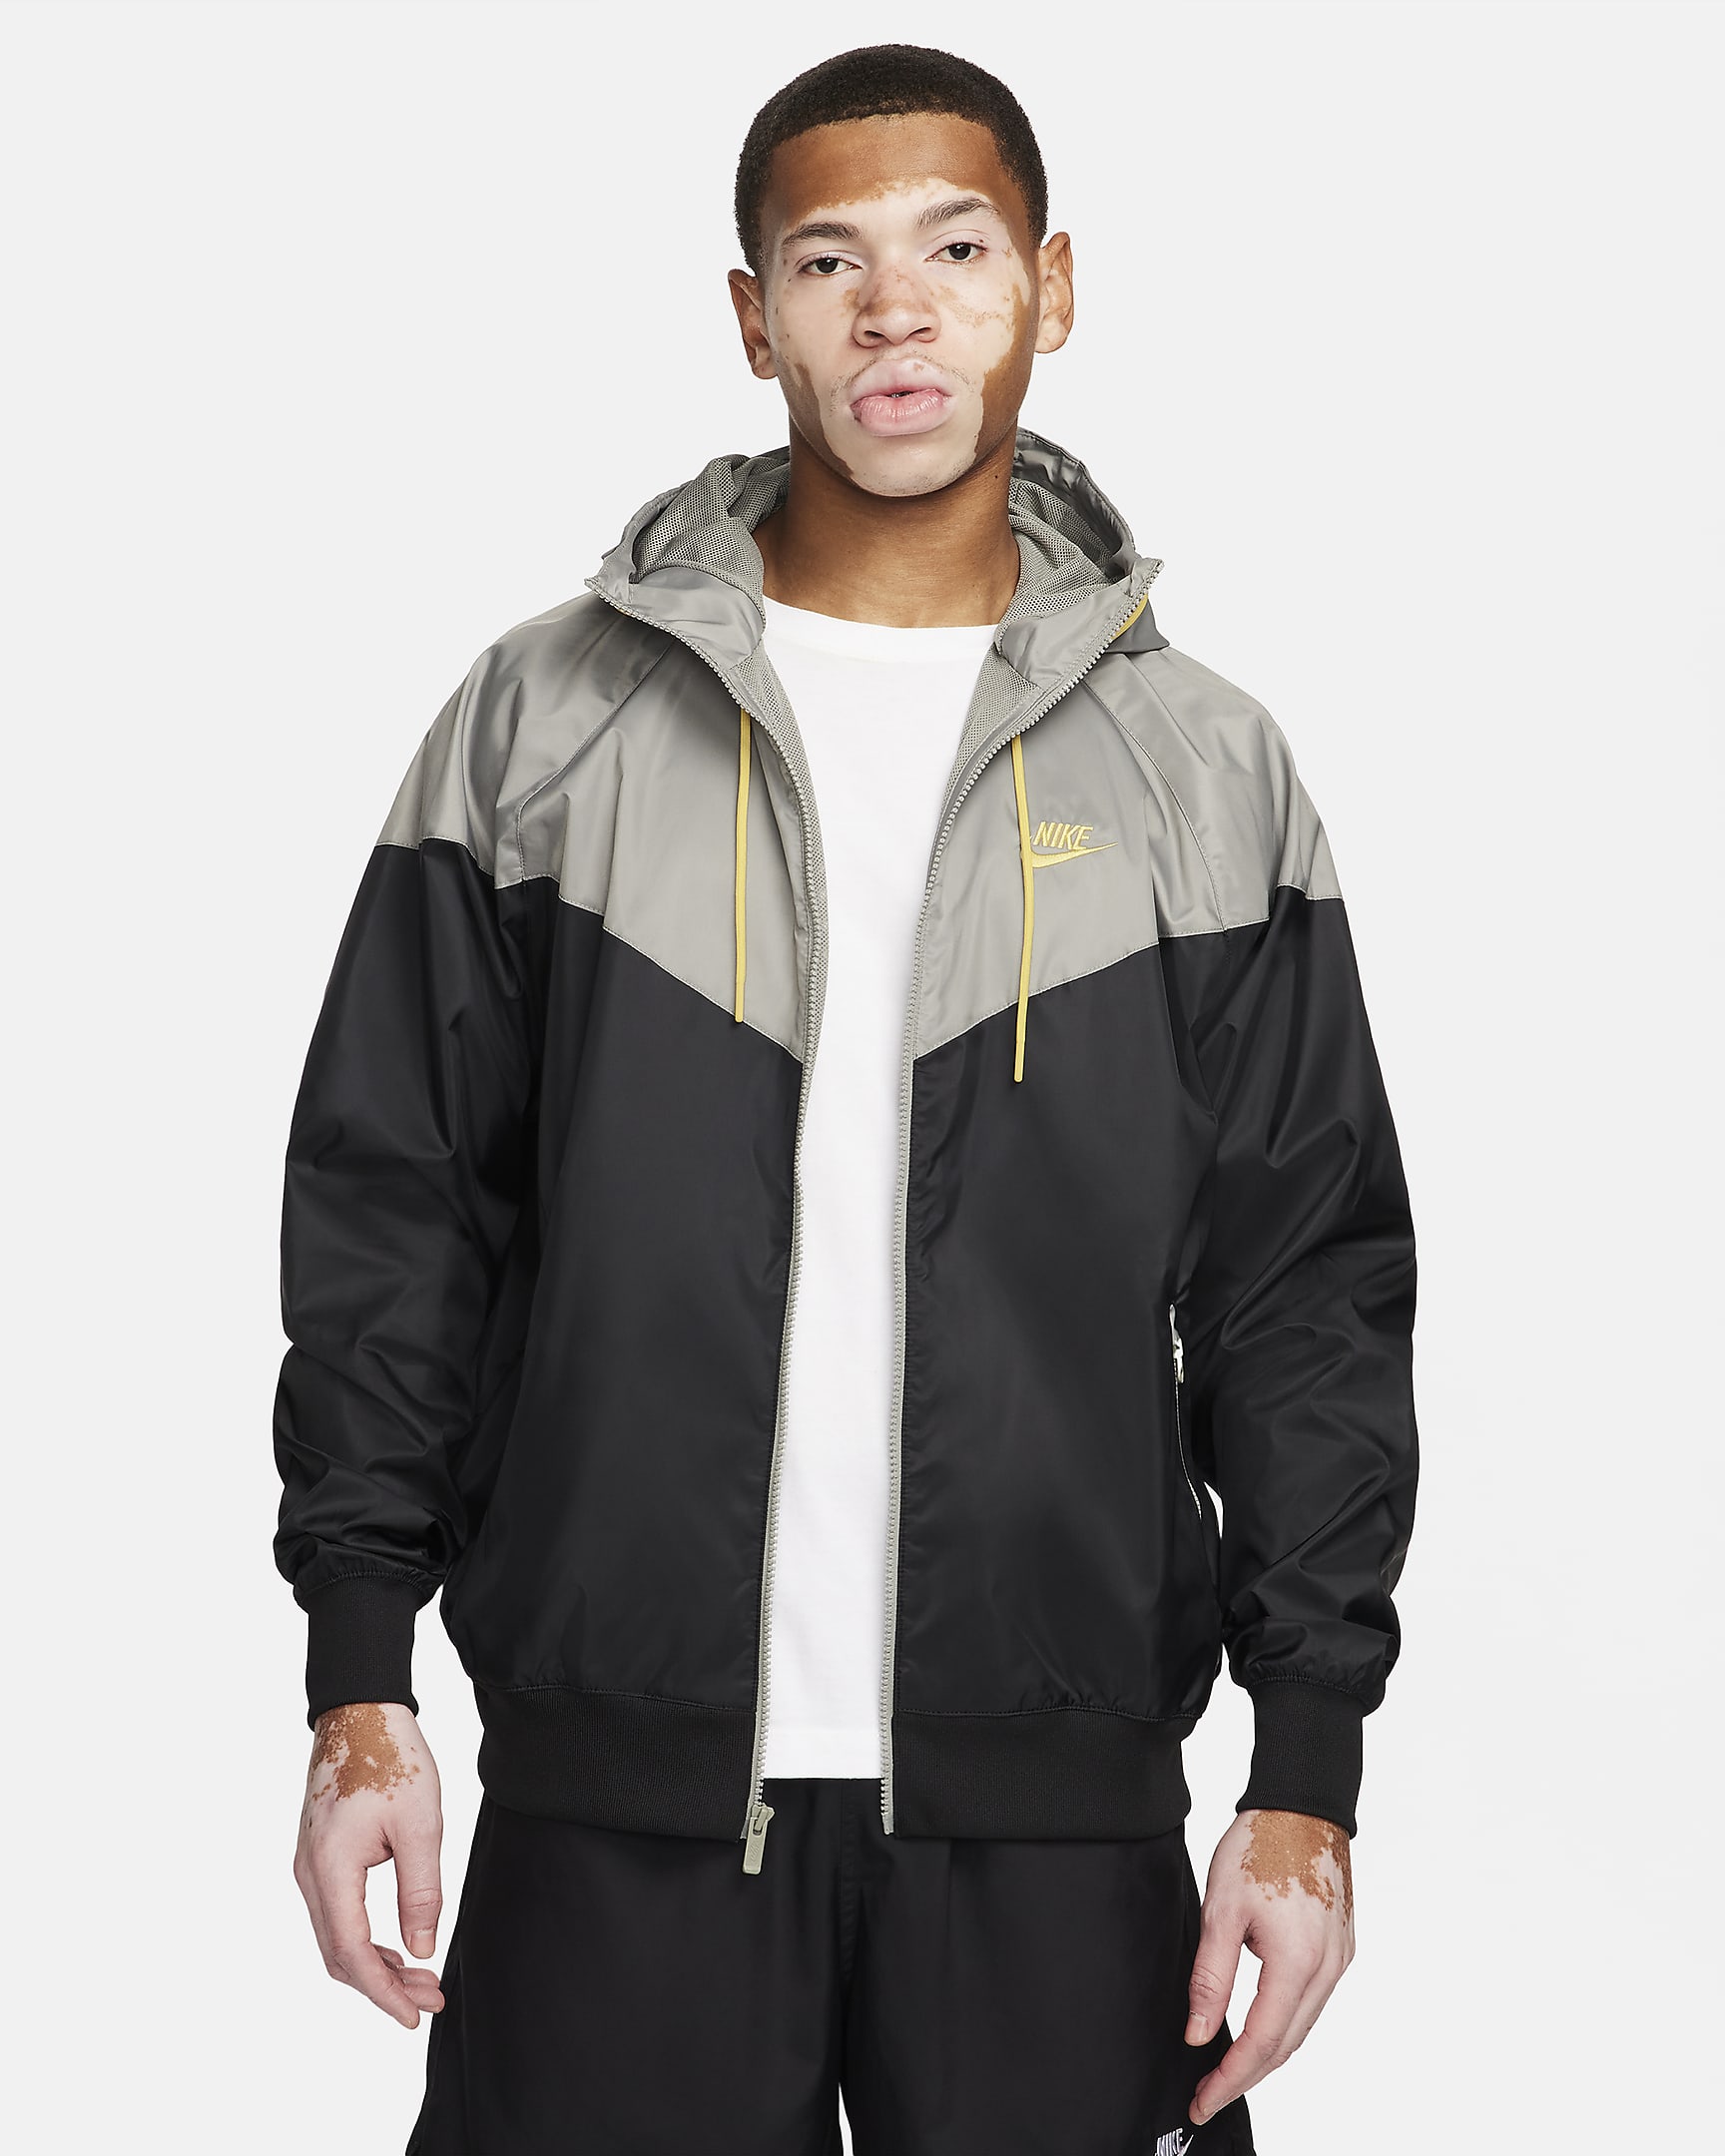 Nike Sportswear Windrunner Men's Hooded Jacket - Black/Dark Stucco/Saturn Gold